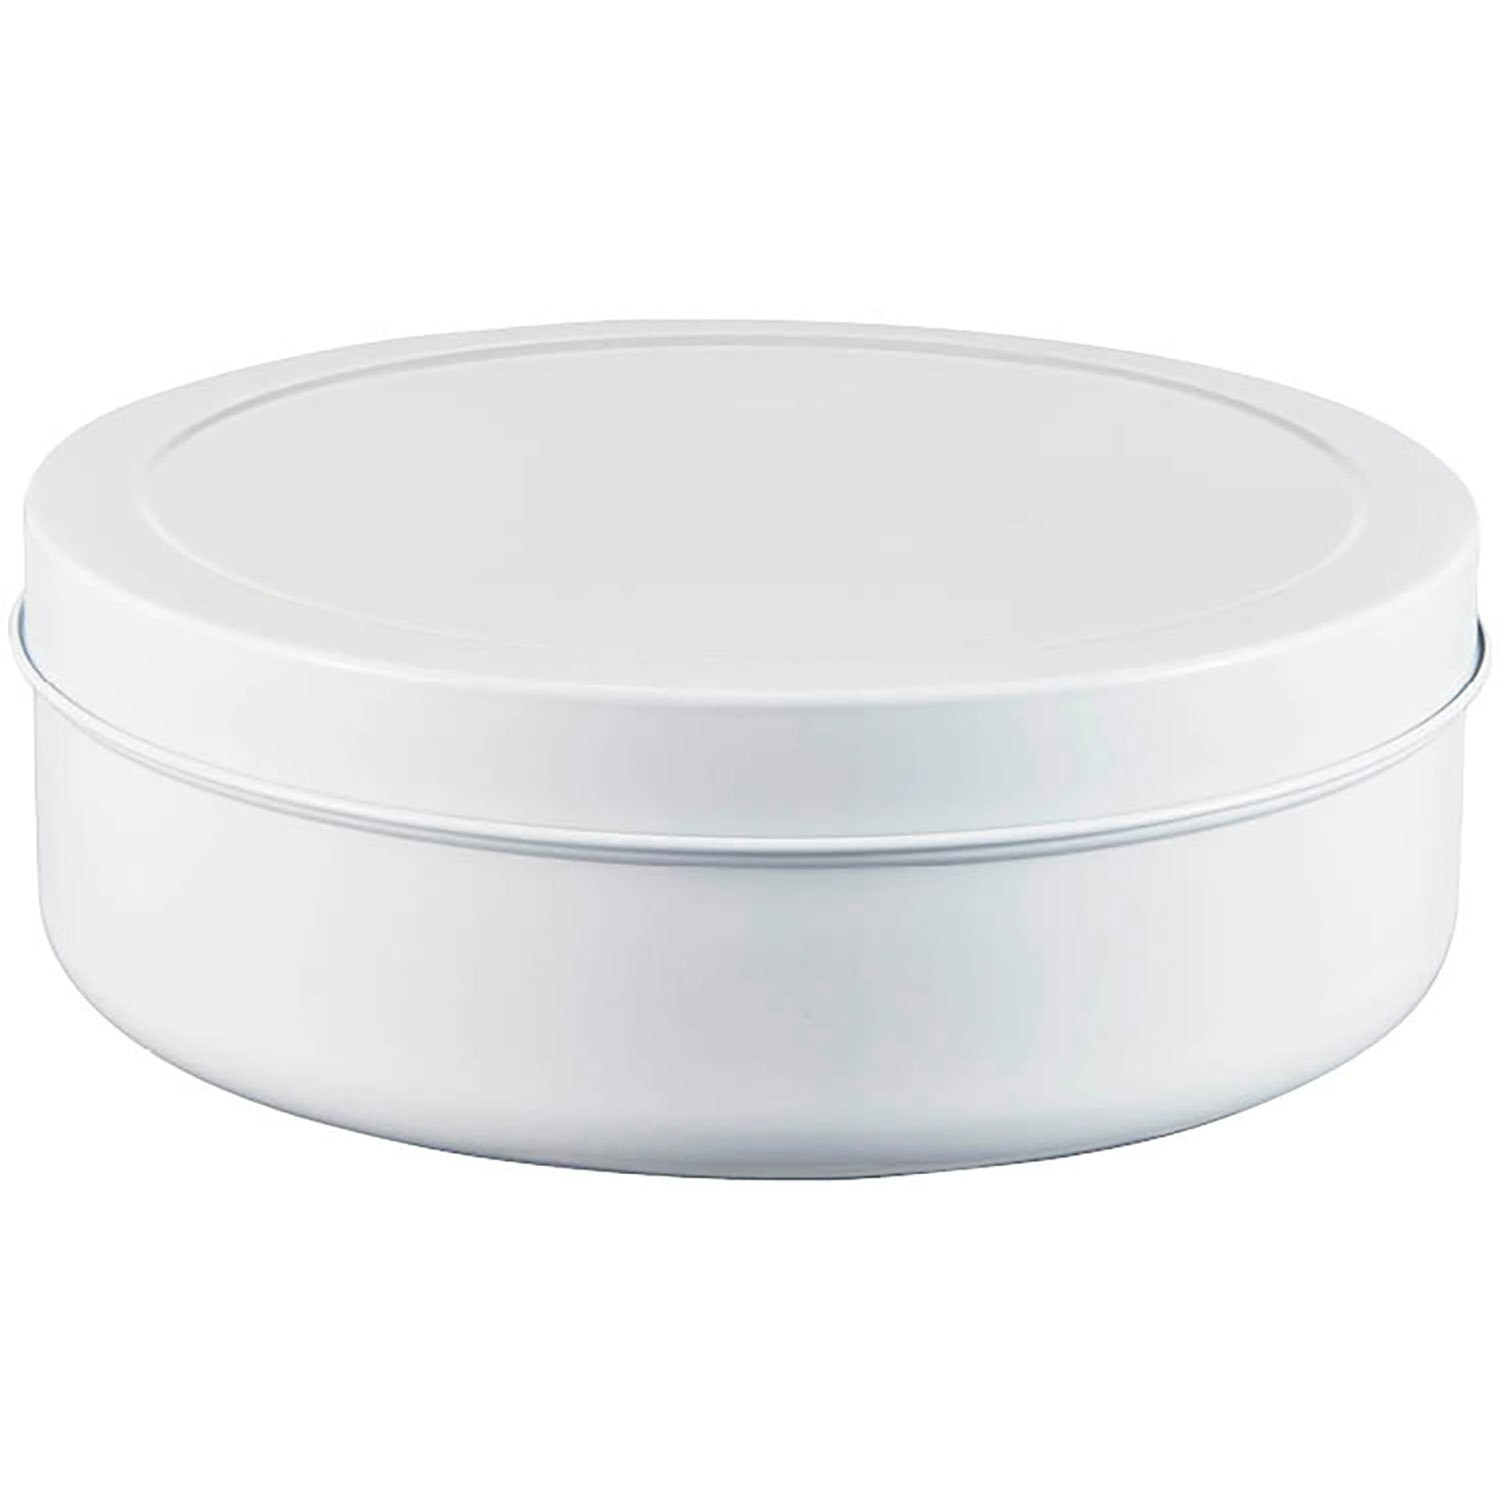 ToGo&ToStay Lunch Box White, 13x10x6 cm - Villeroy & Boch @ RoyalDesign